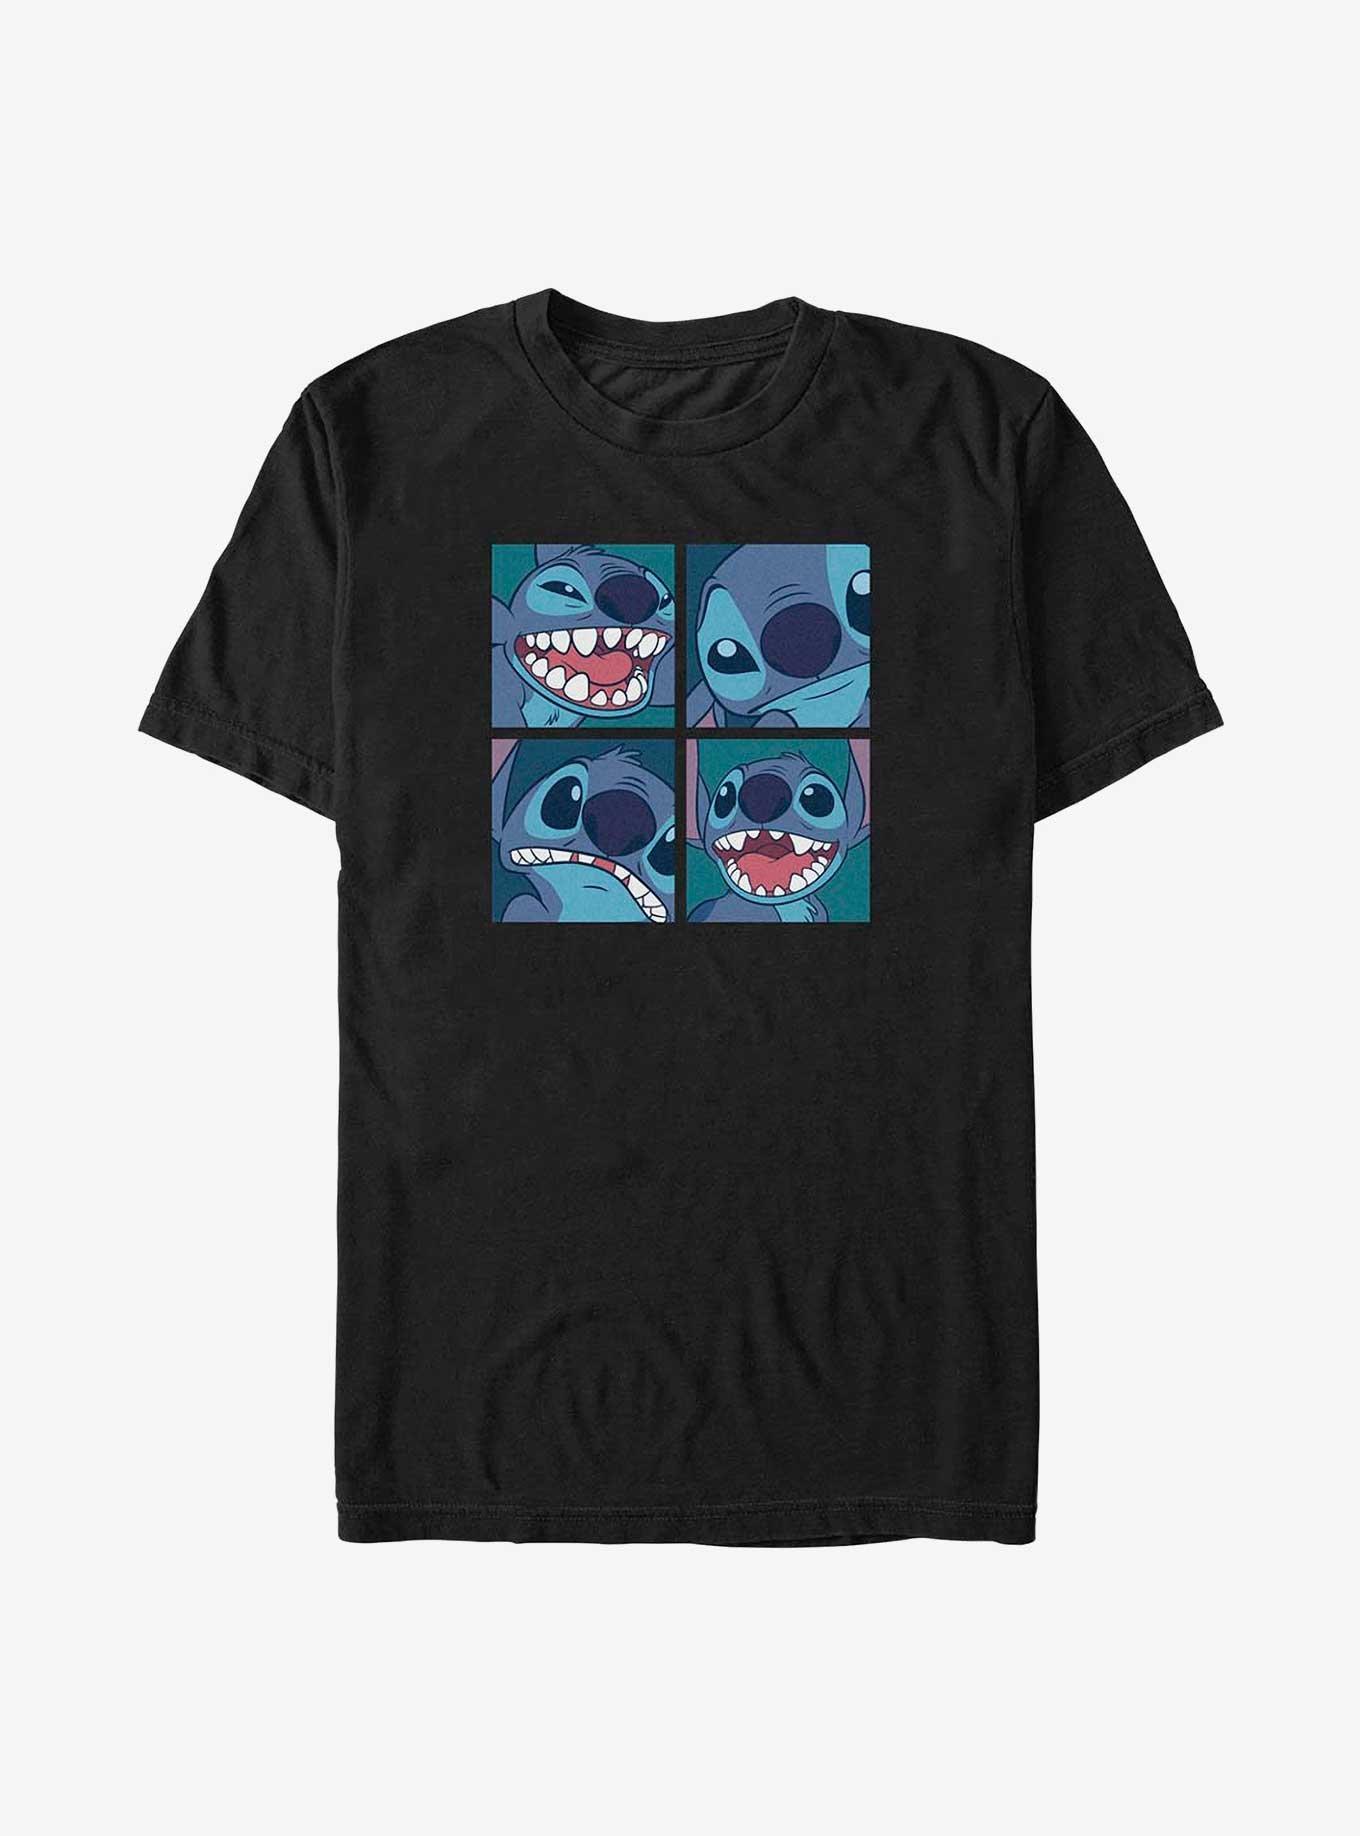 Disney Lilo & Stitch Up Close T-Shirt